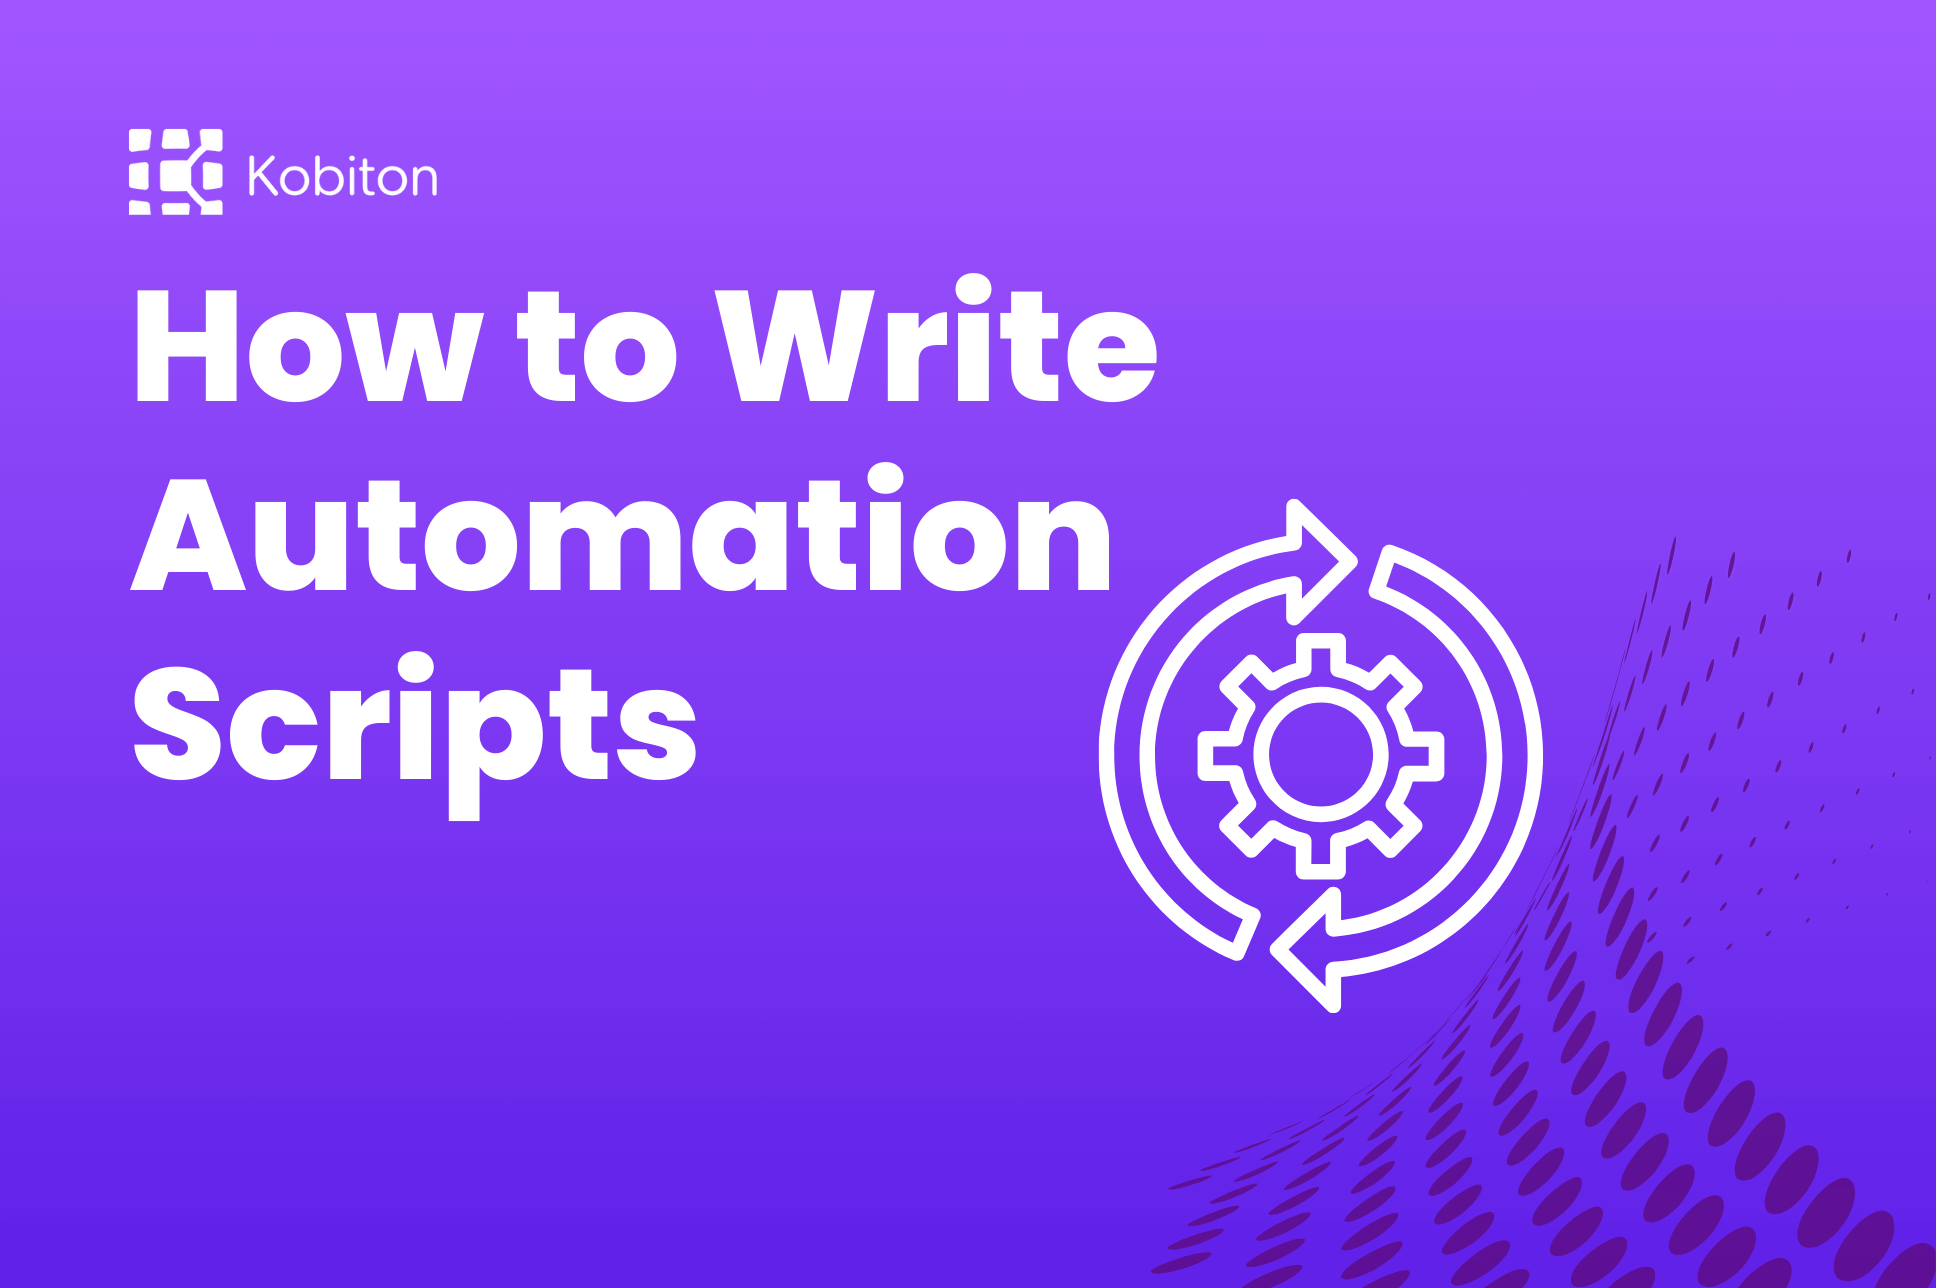 Automation scripts